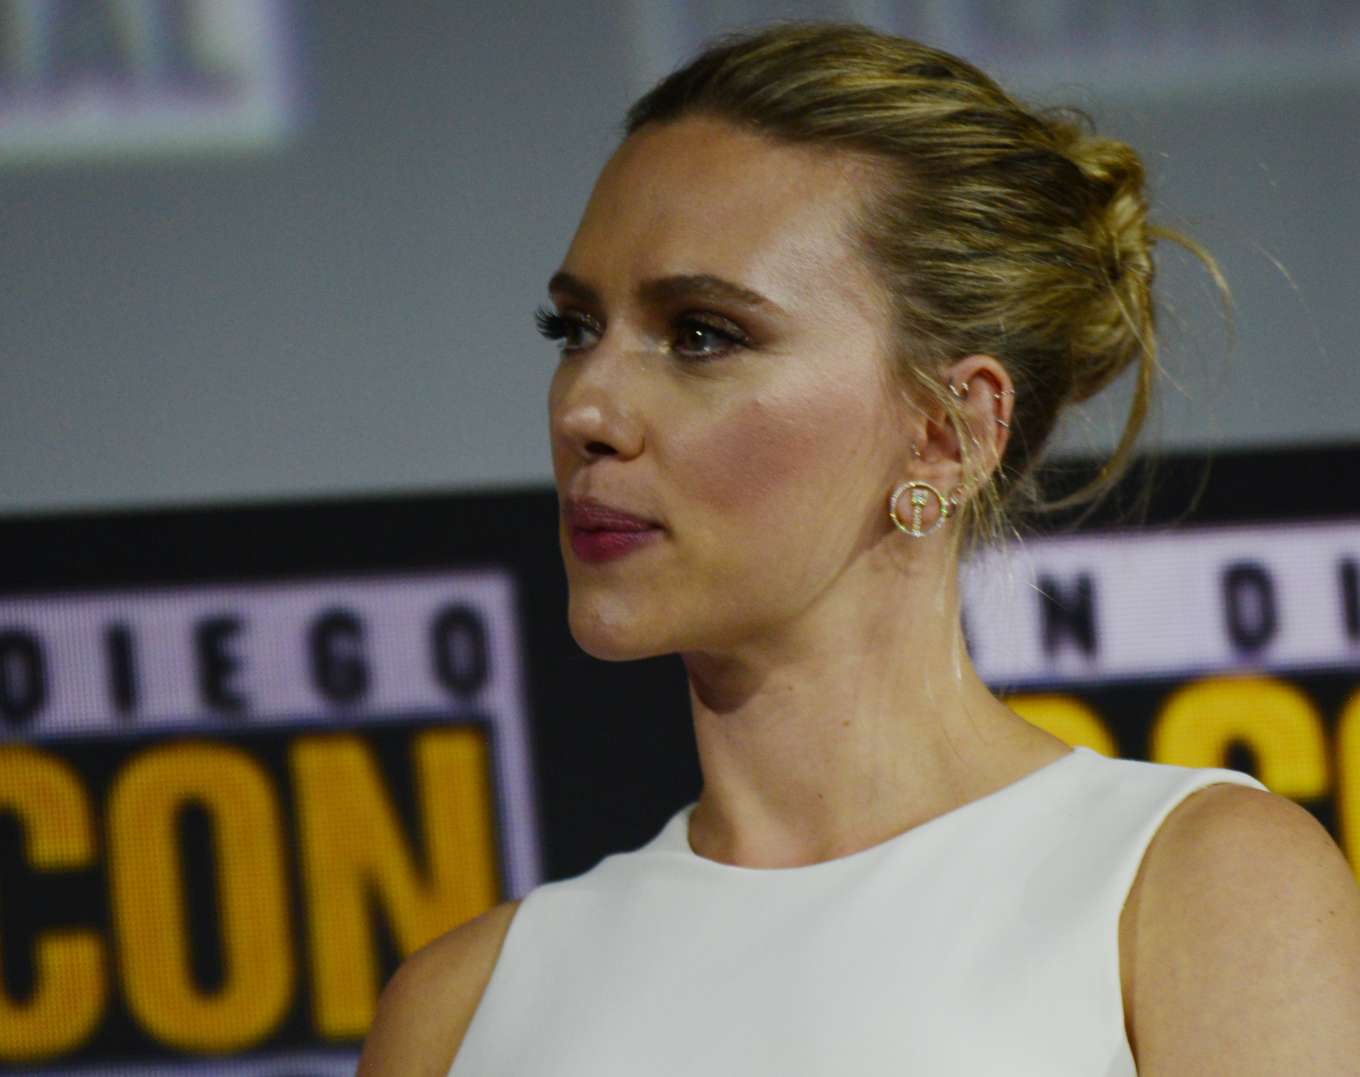 Scarlett Johansson and Rachel Weisz â€“ â€˜Black Widowâ€™ Panel at Comic-Con 2019 in San Diego